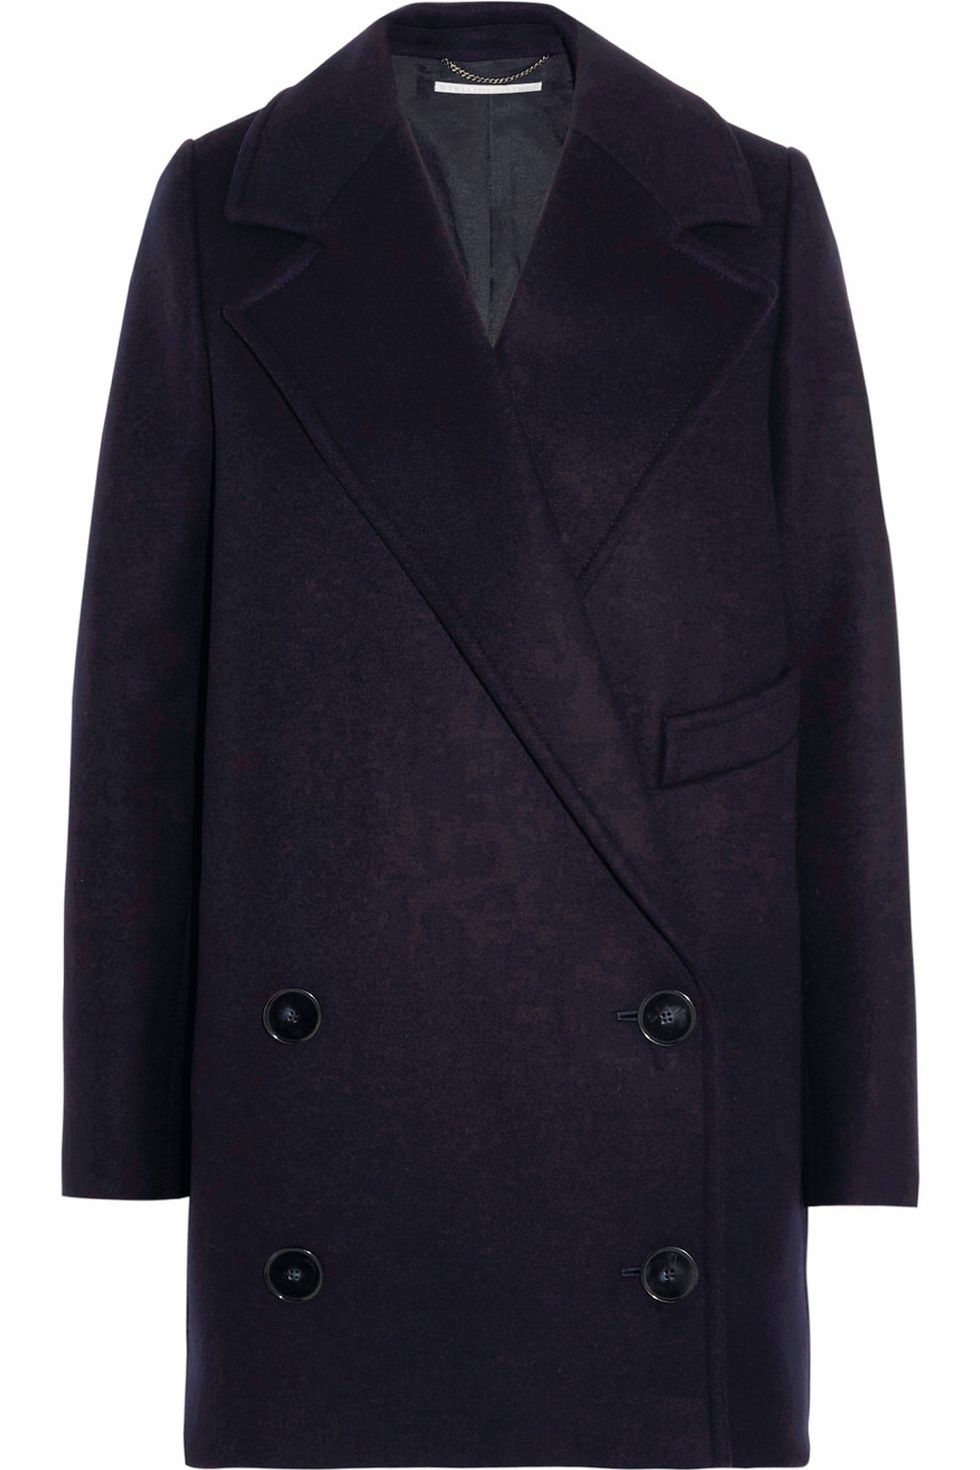 Clothing, Outerwear, Coat, Overcoat, Sleeve, Collar, Jacket, Blazer, Button, Suit, 